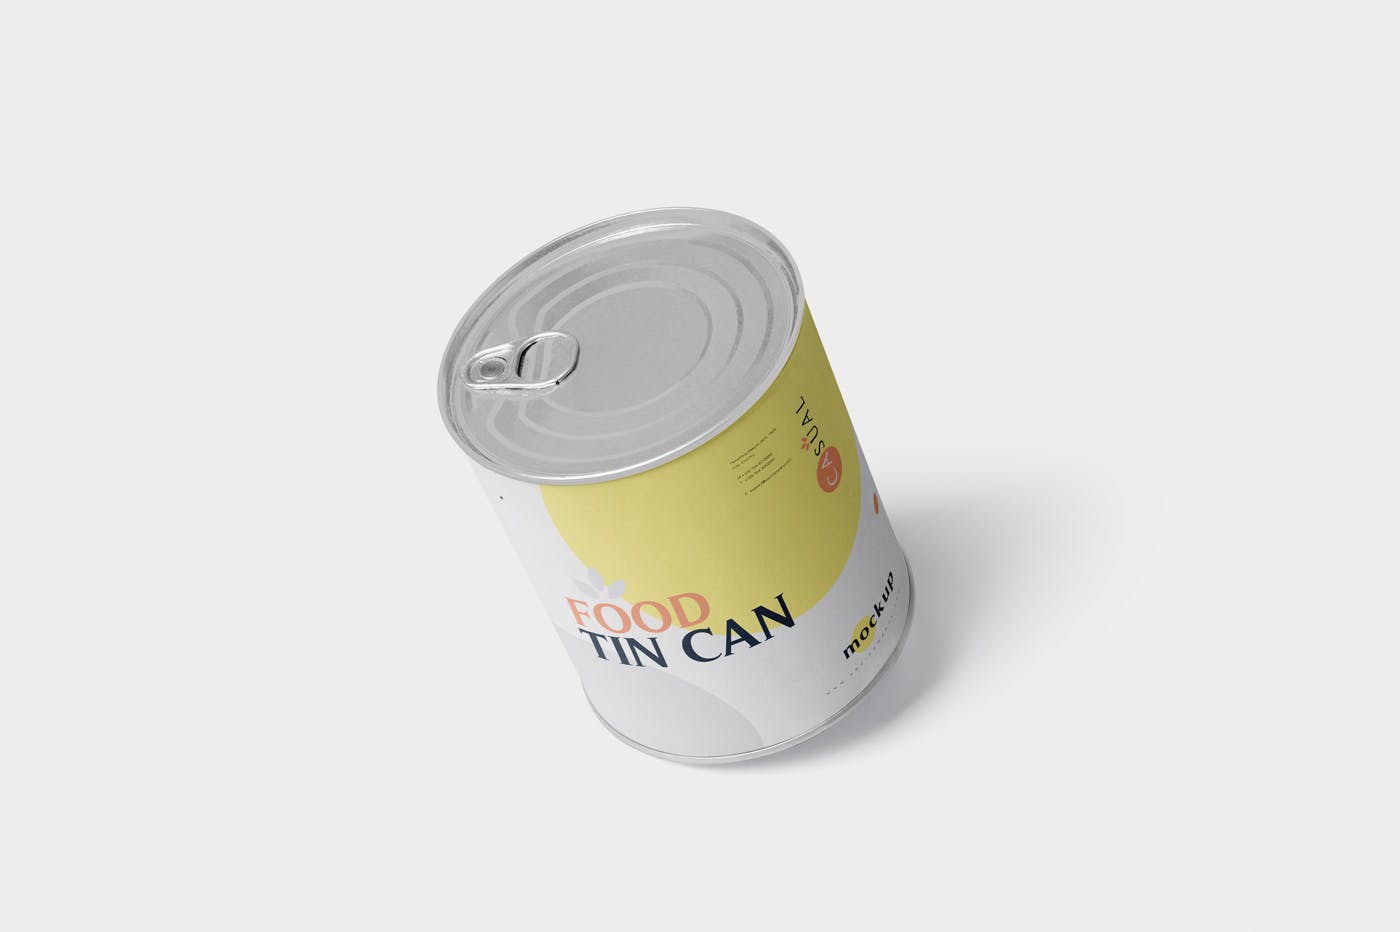 中型食物罐头外观设计样机模板 Food Tin Can Mockup Medium Size – Round插图(4)